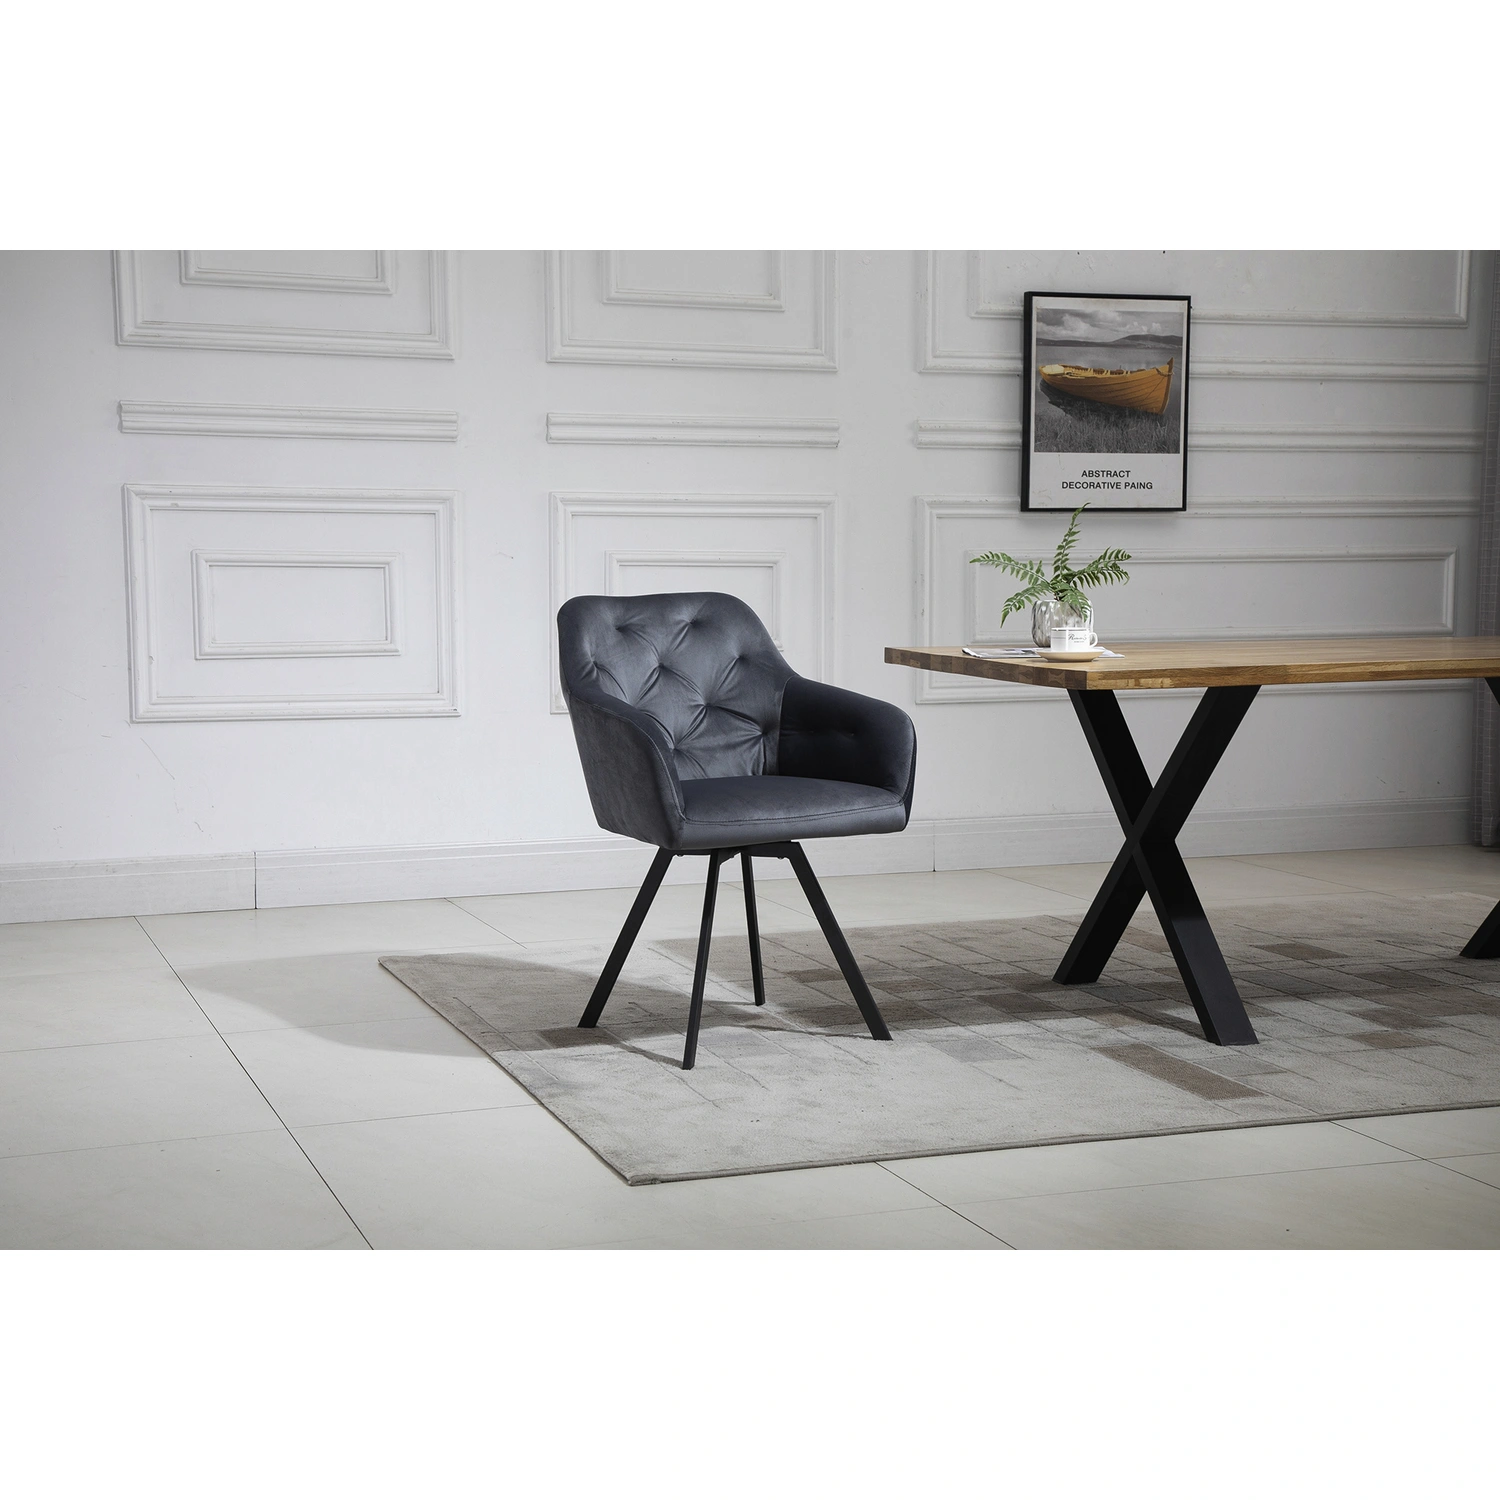 SalesFever Stuhl, Höhe: cm, grau/schwarz 85